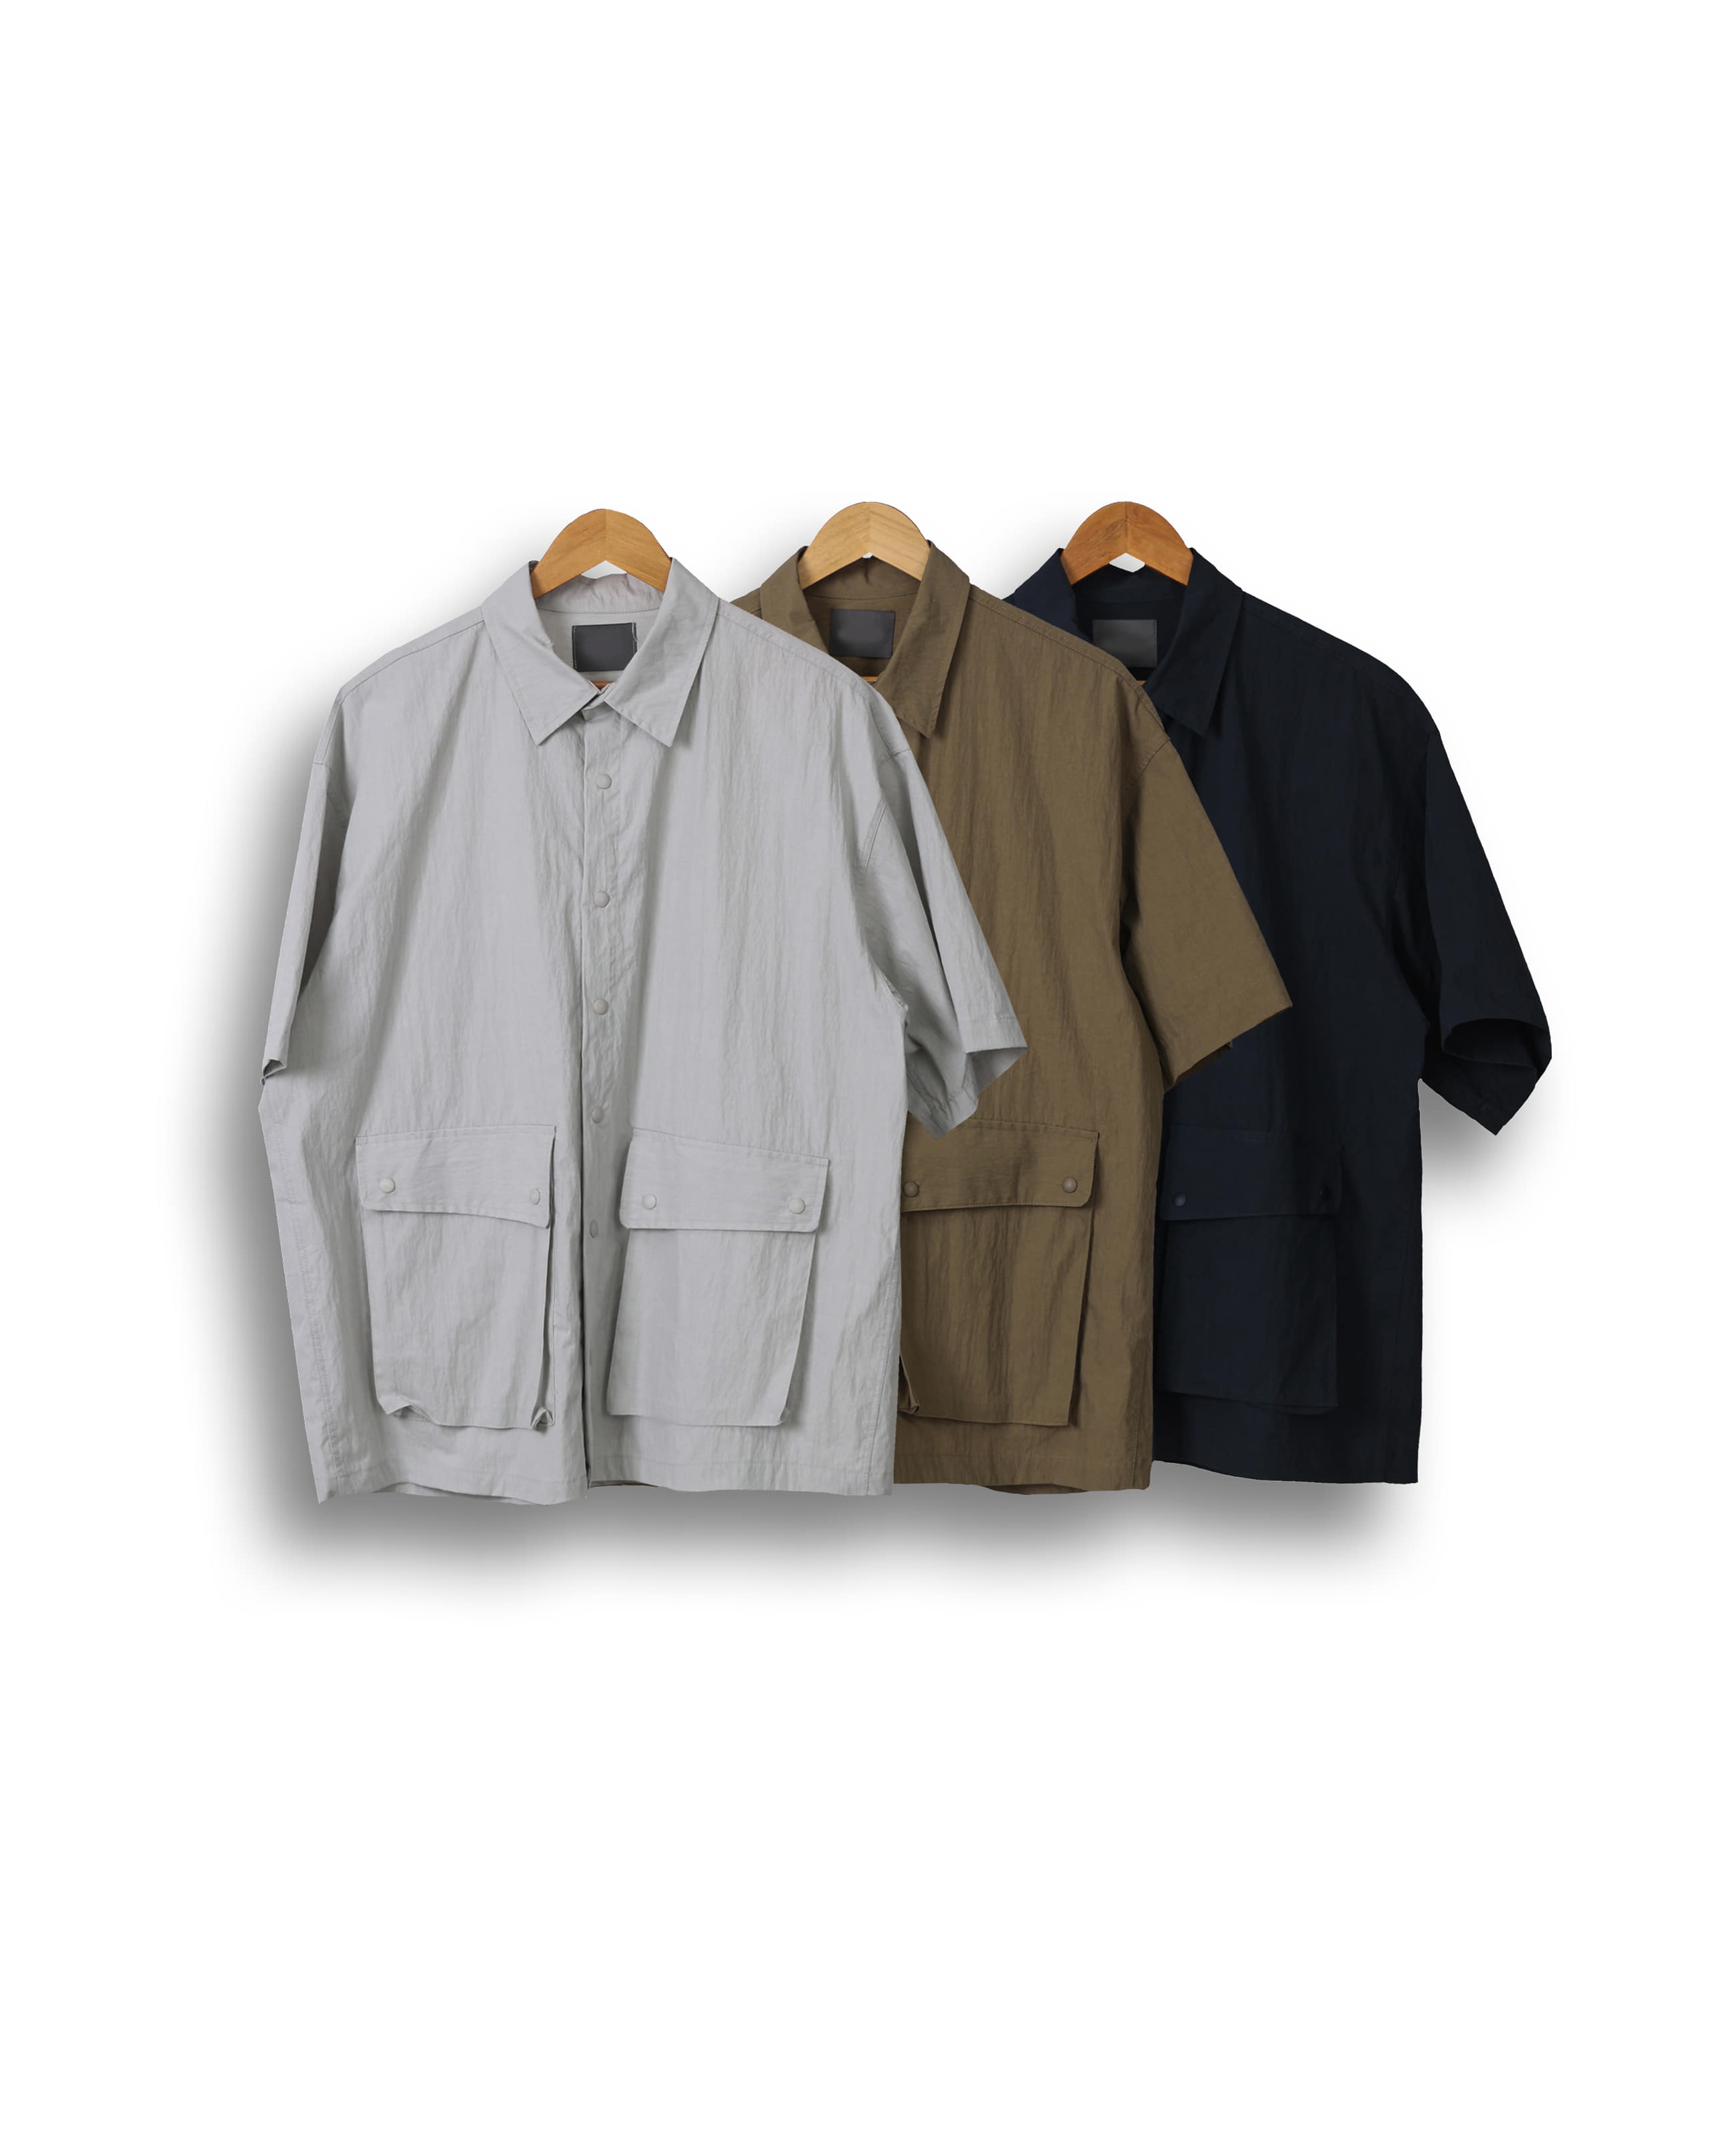 ANSWER CN Wide Pocket Half Shirts (Navy/Khaki/Gray)